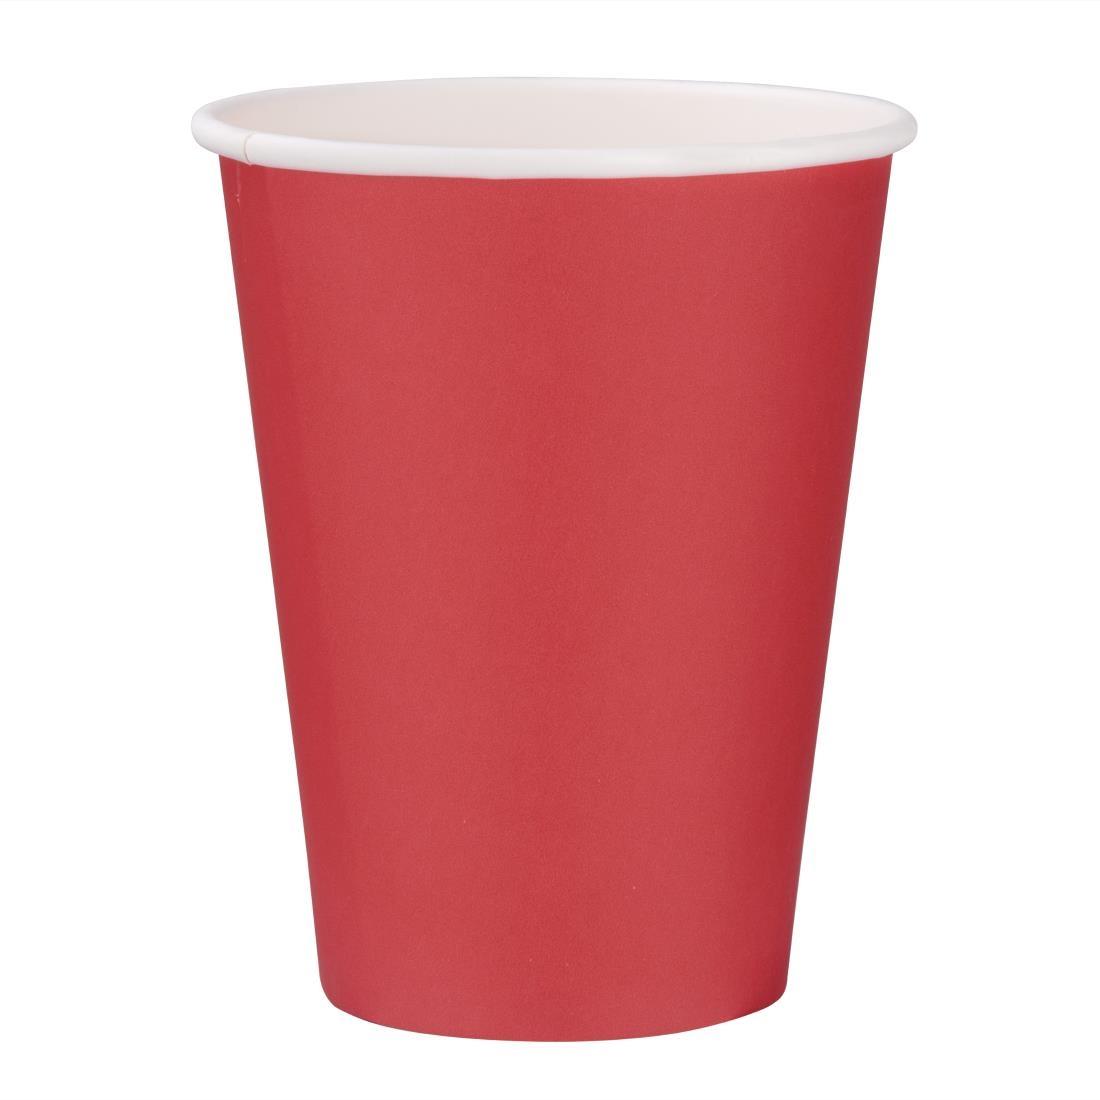 Fiesta Recyclable Single Wall Takeaway Coffee Cups Red 340ml / 12oz (Pack of 50) - GP407  - 1